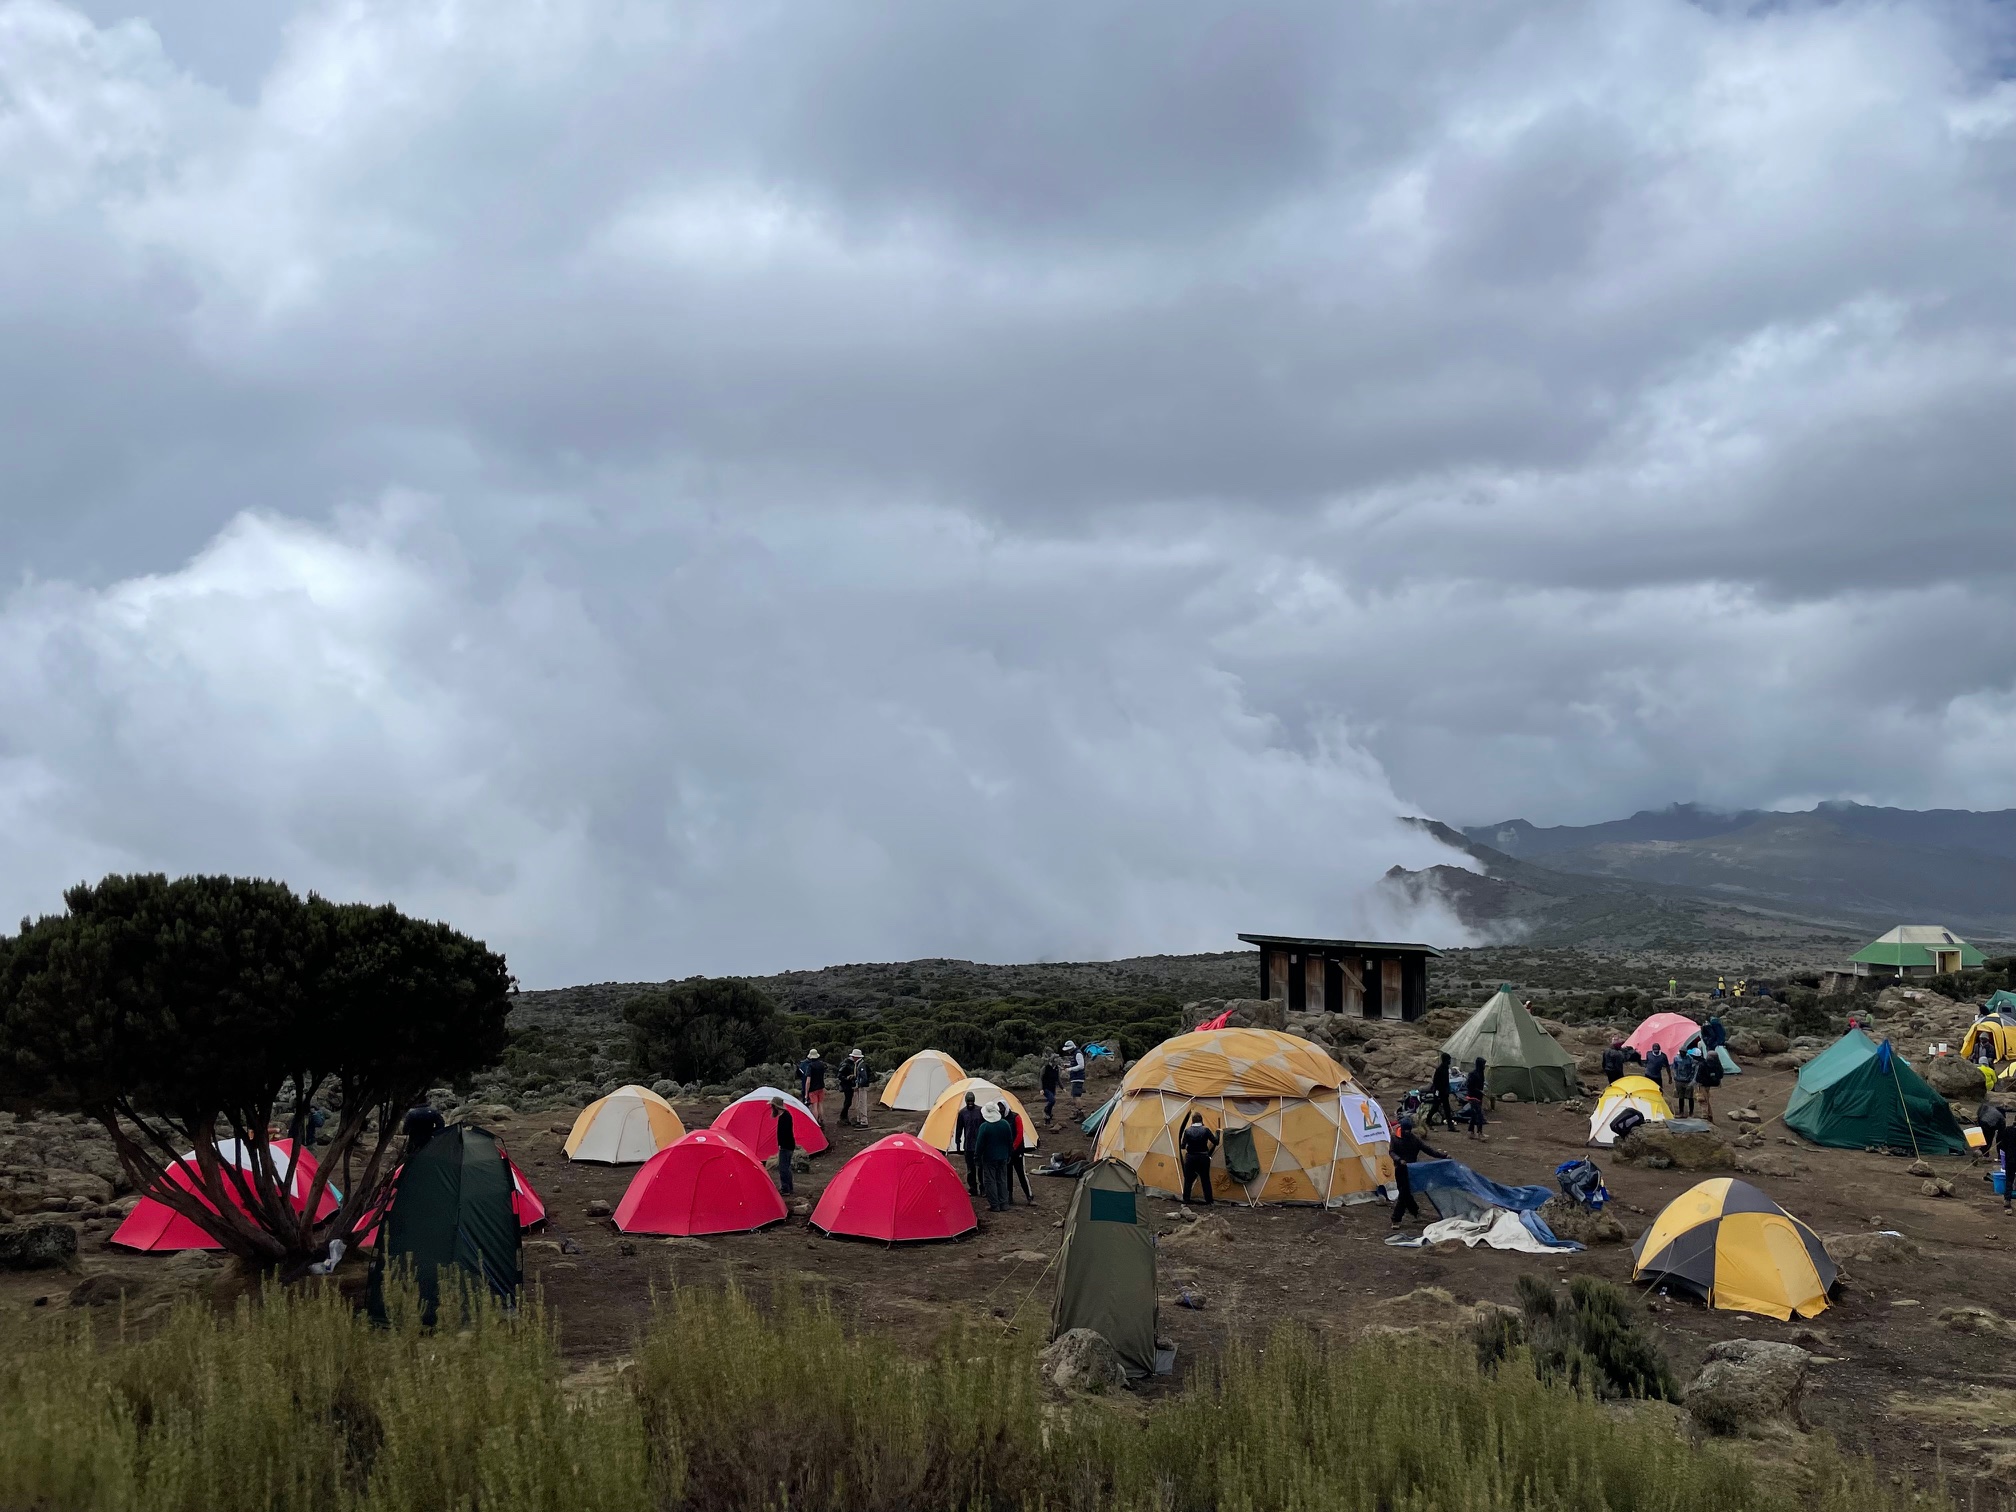 Kilimanjaro: Choosing a Western Company Over a Local Operator